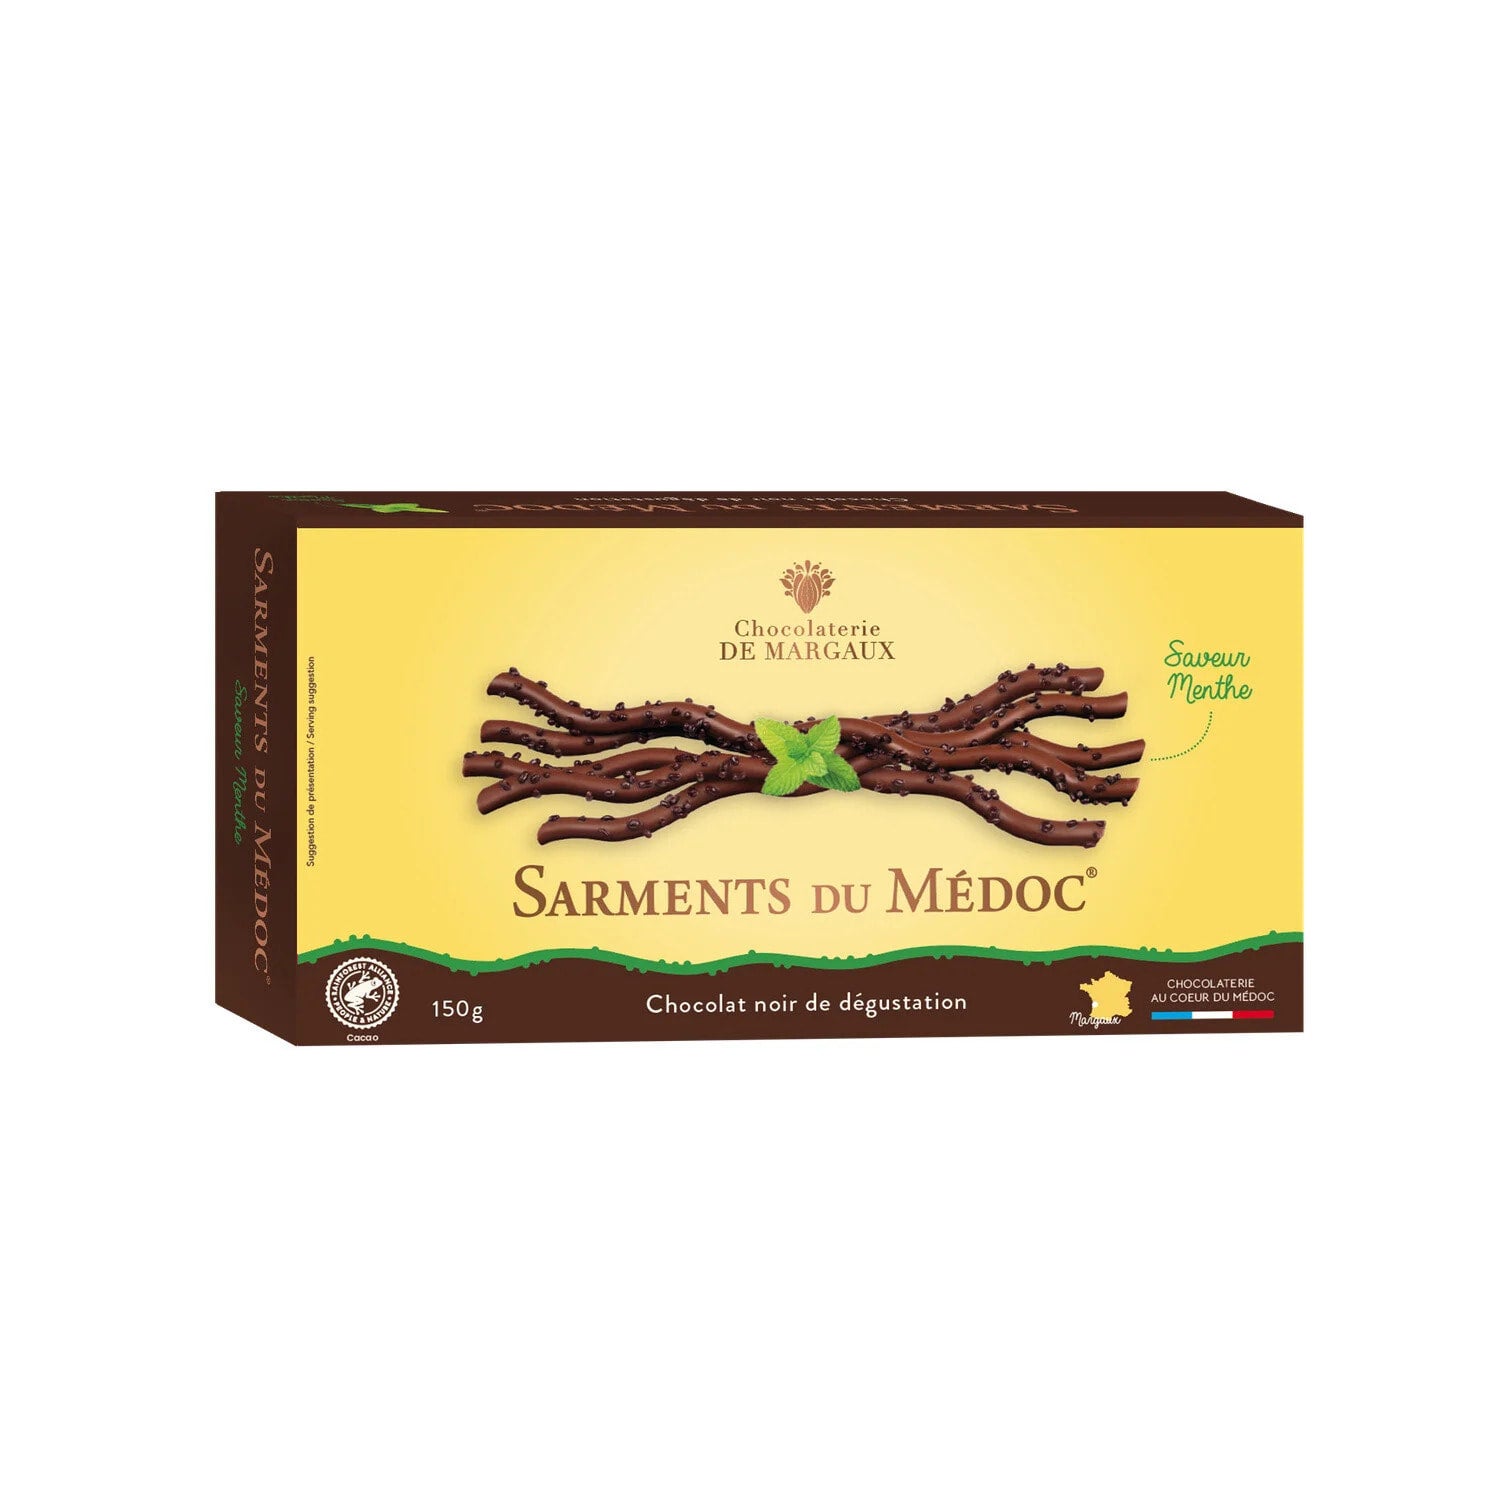 Morin Senteurs de Provence - Cypress - Dark Chocolate